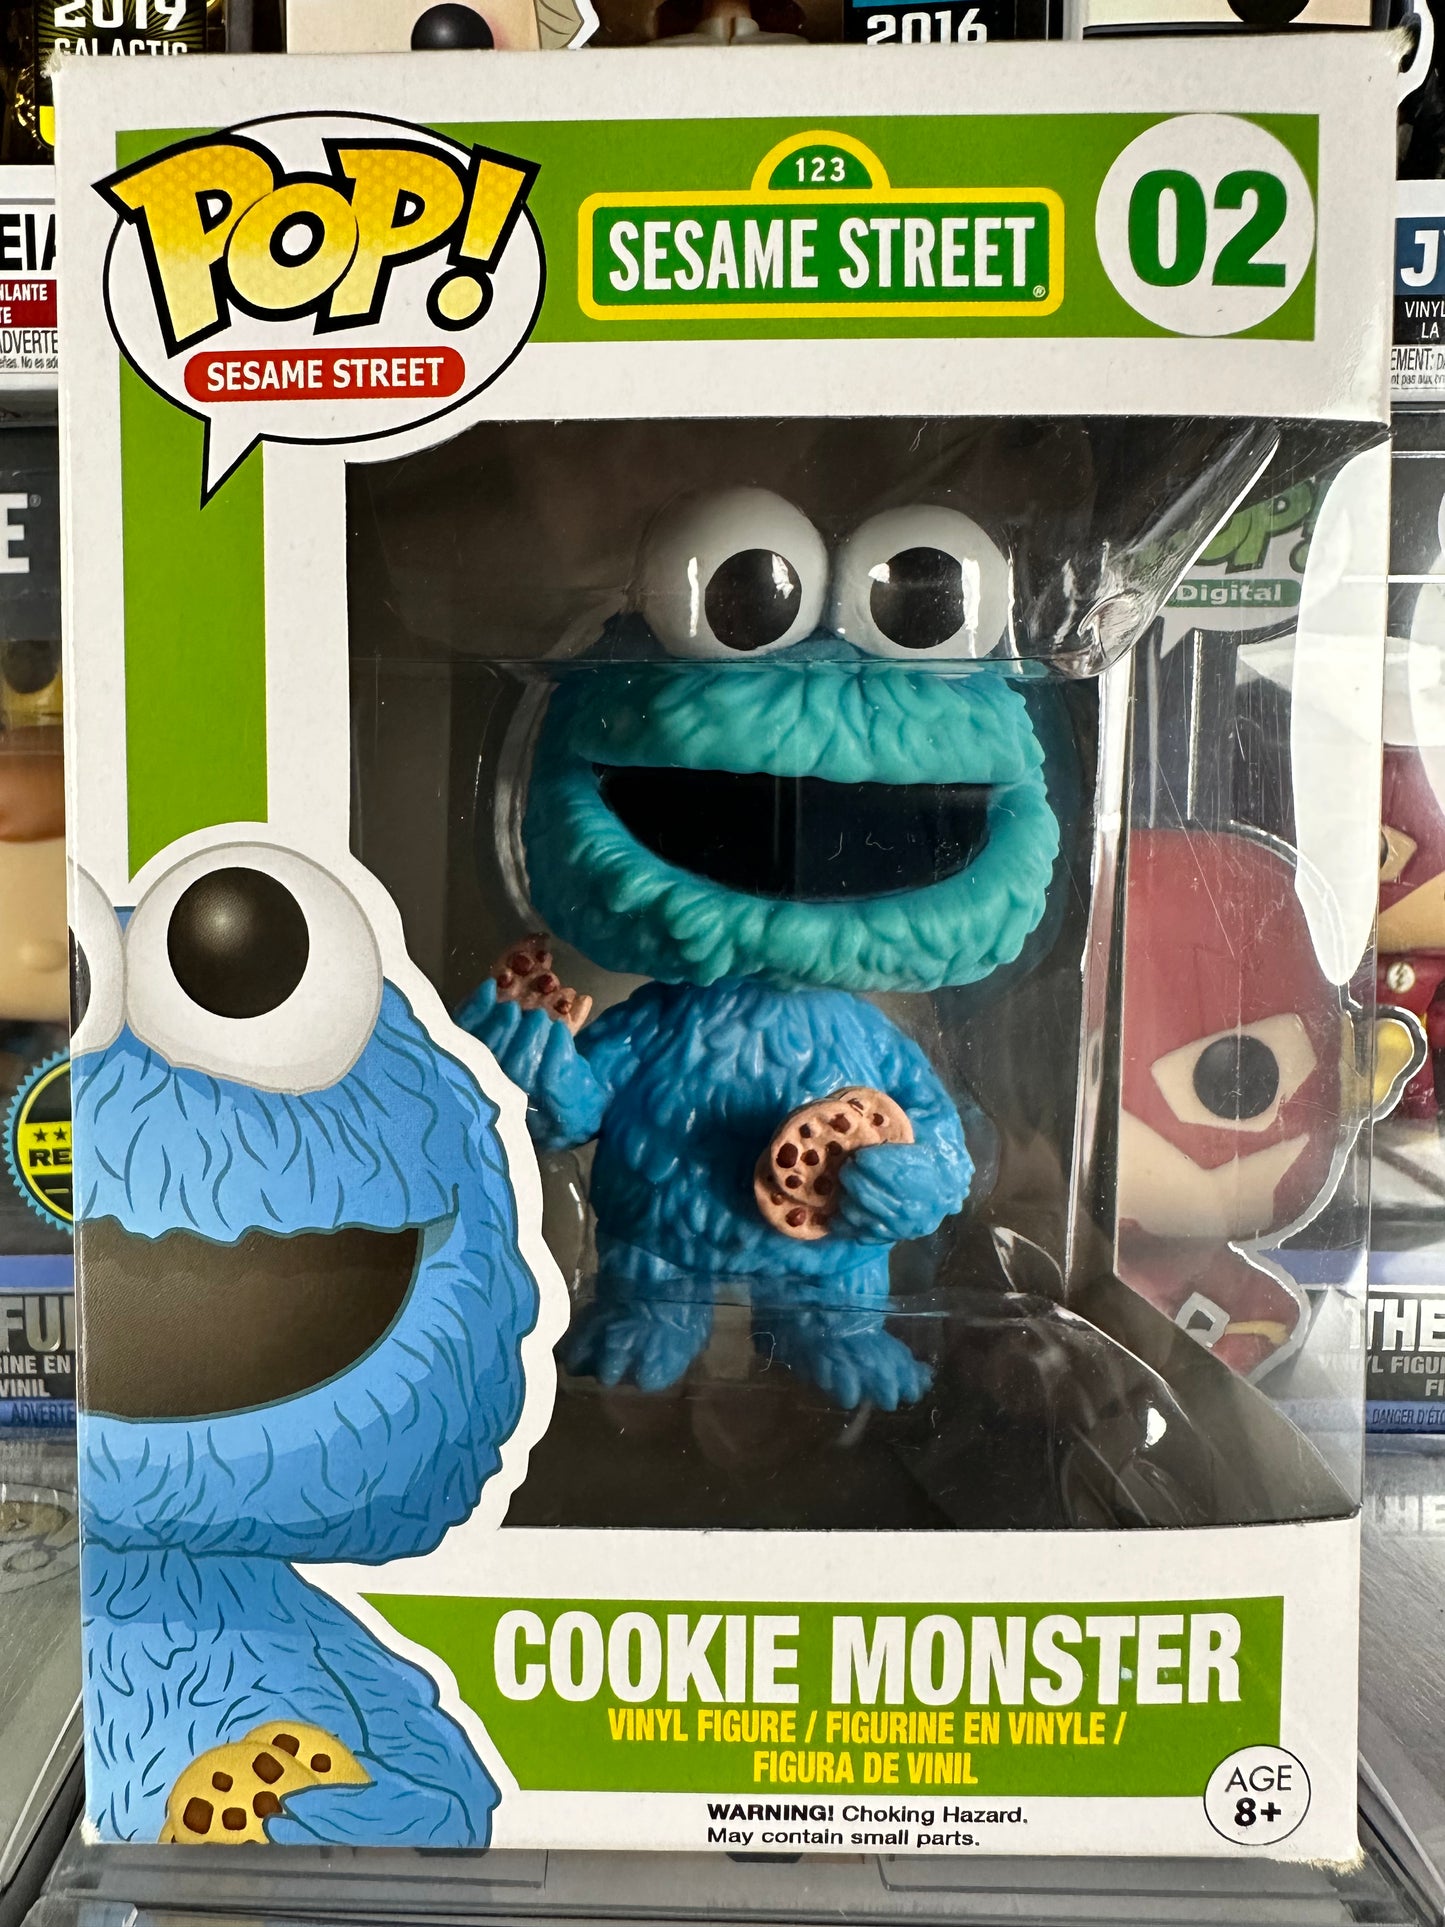 Pop Sesame Street - Cookie Monster (02) Vaulted